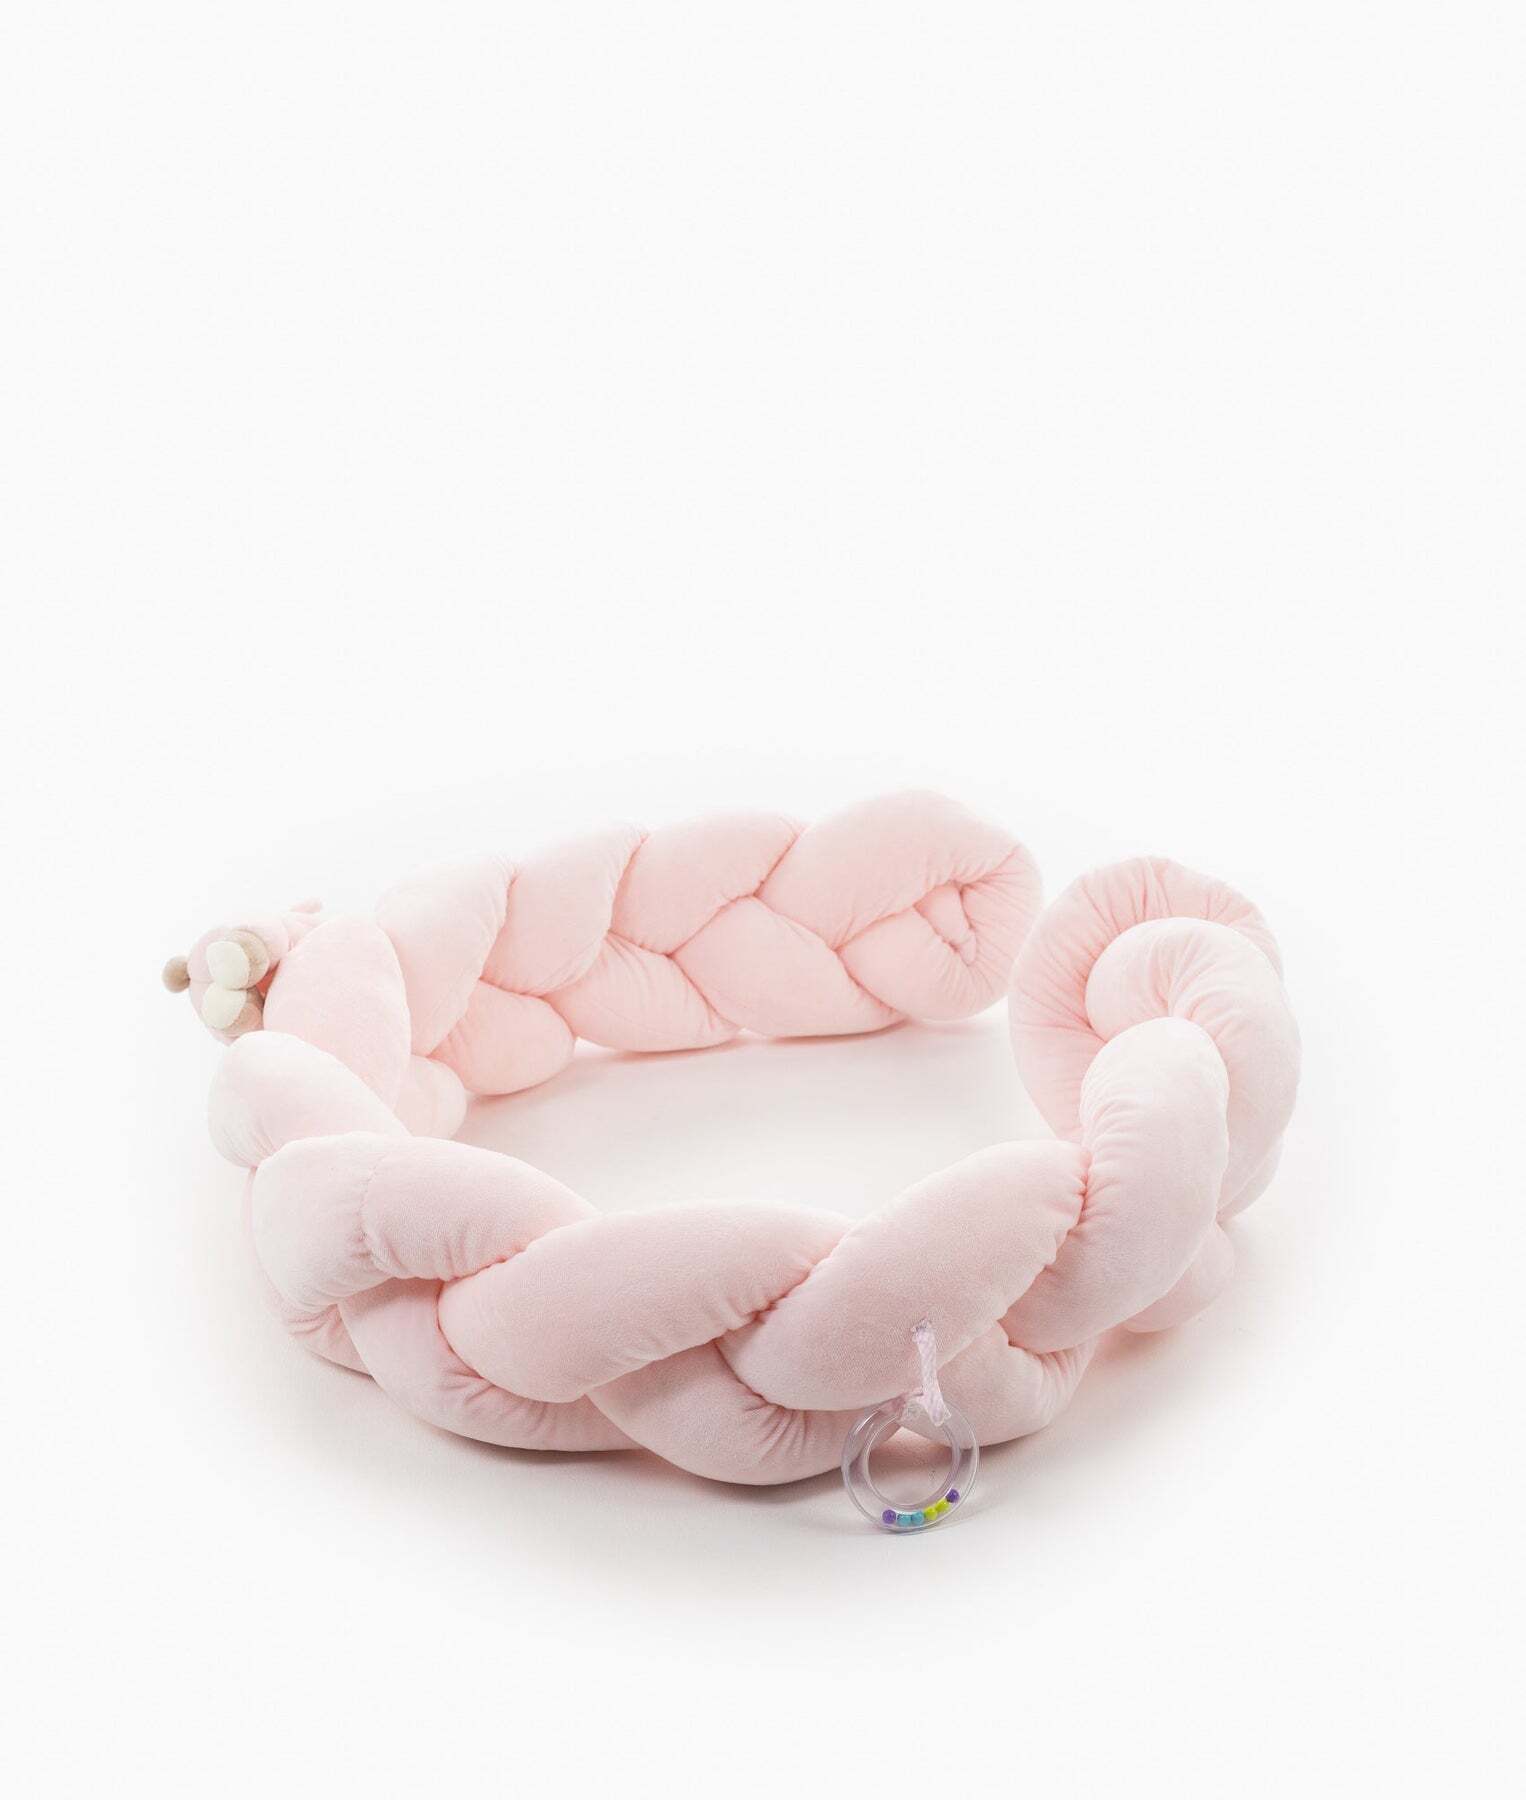 braided-bumper-pink-679_1800x1800